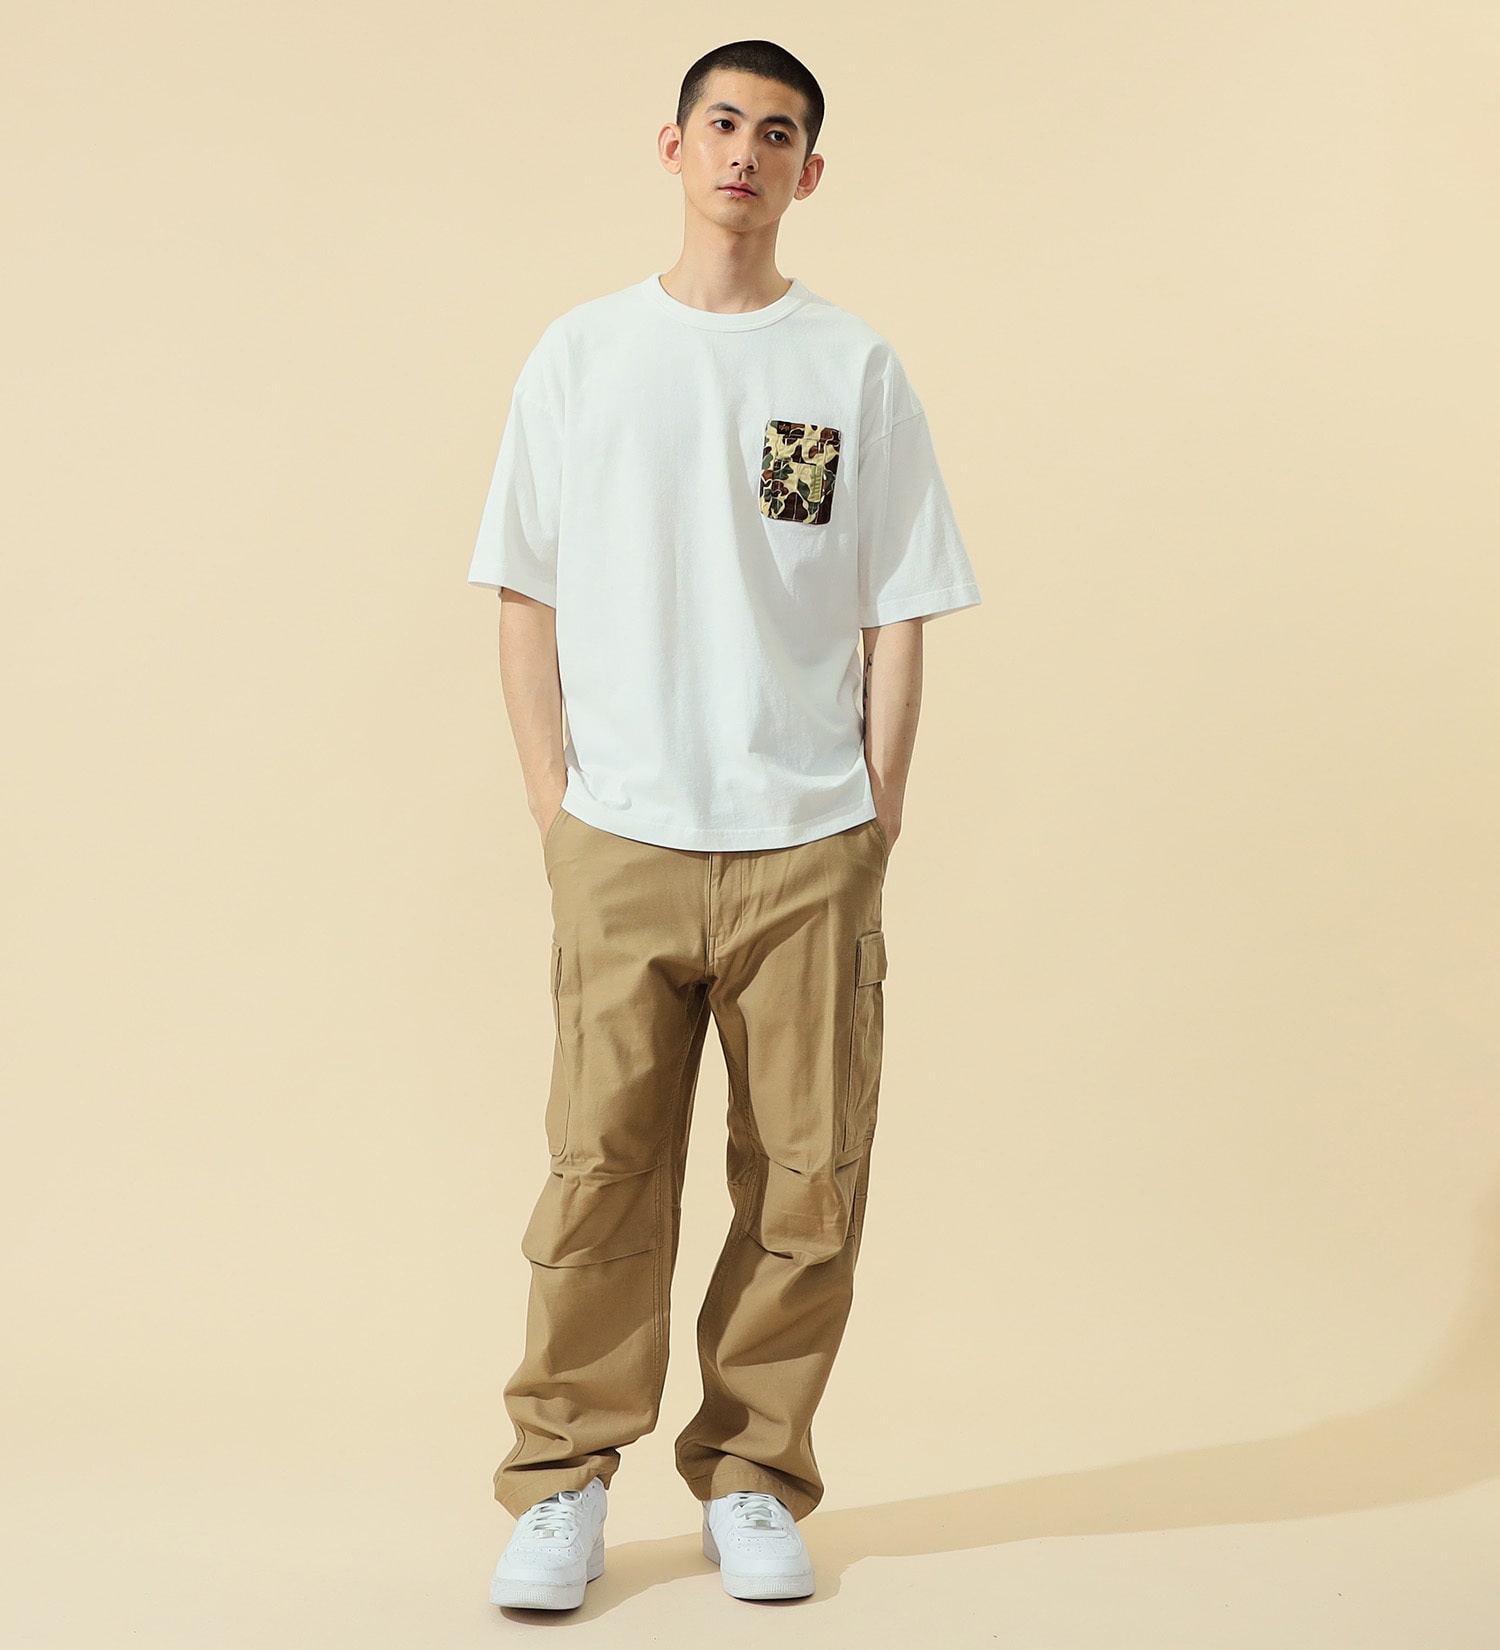 ALPHA(アルファ)のユーティリティーポケットTシャツ (カモ) 半袖|トップス/Tシャツ/カットソー/メンズ|ホワイト